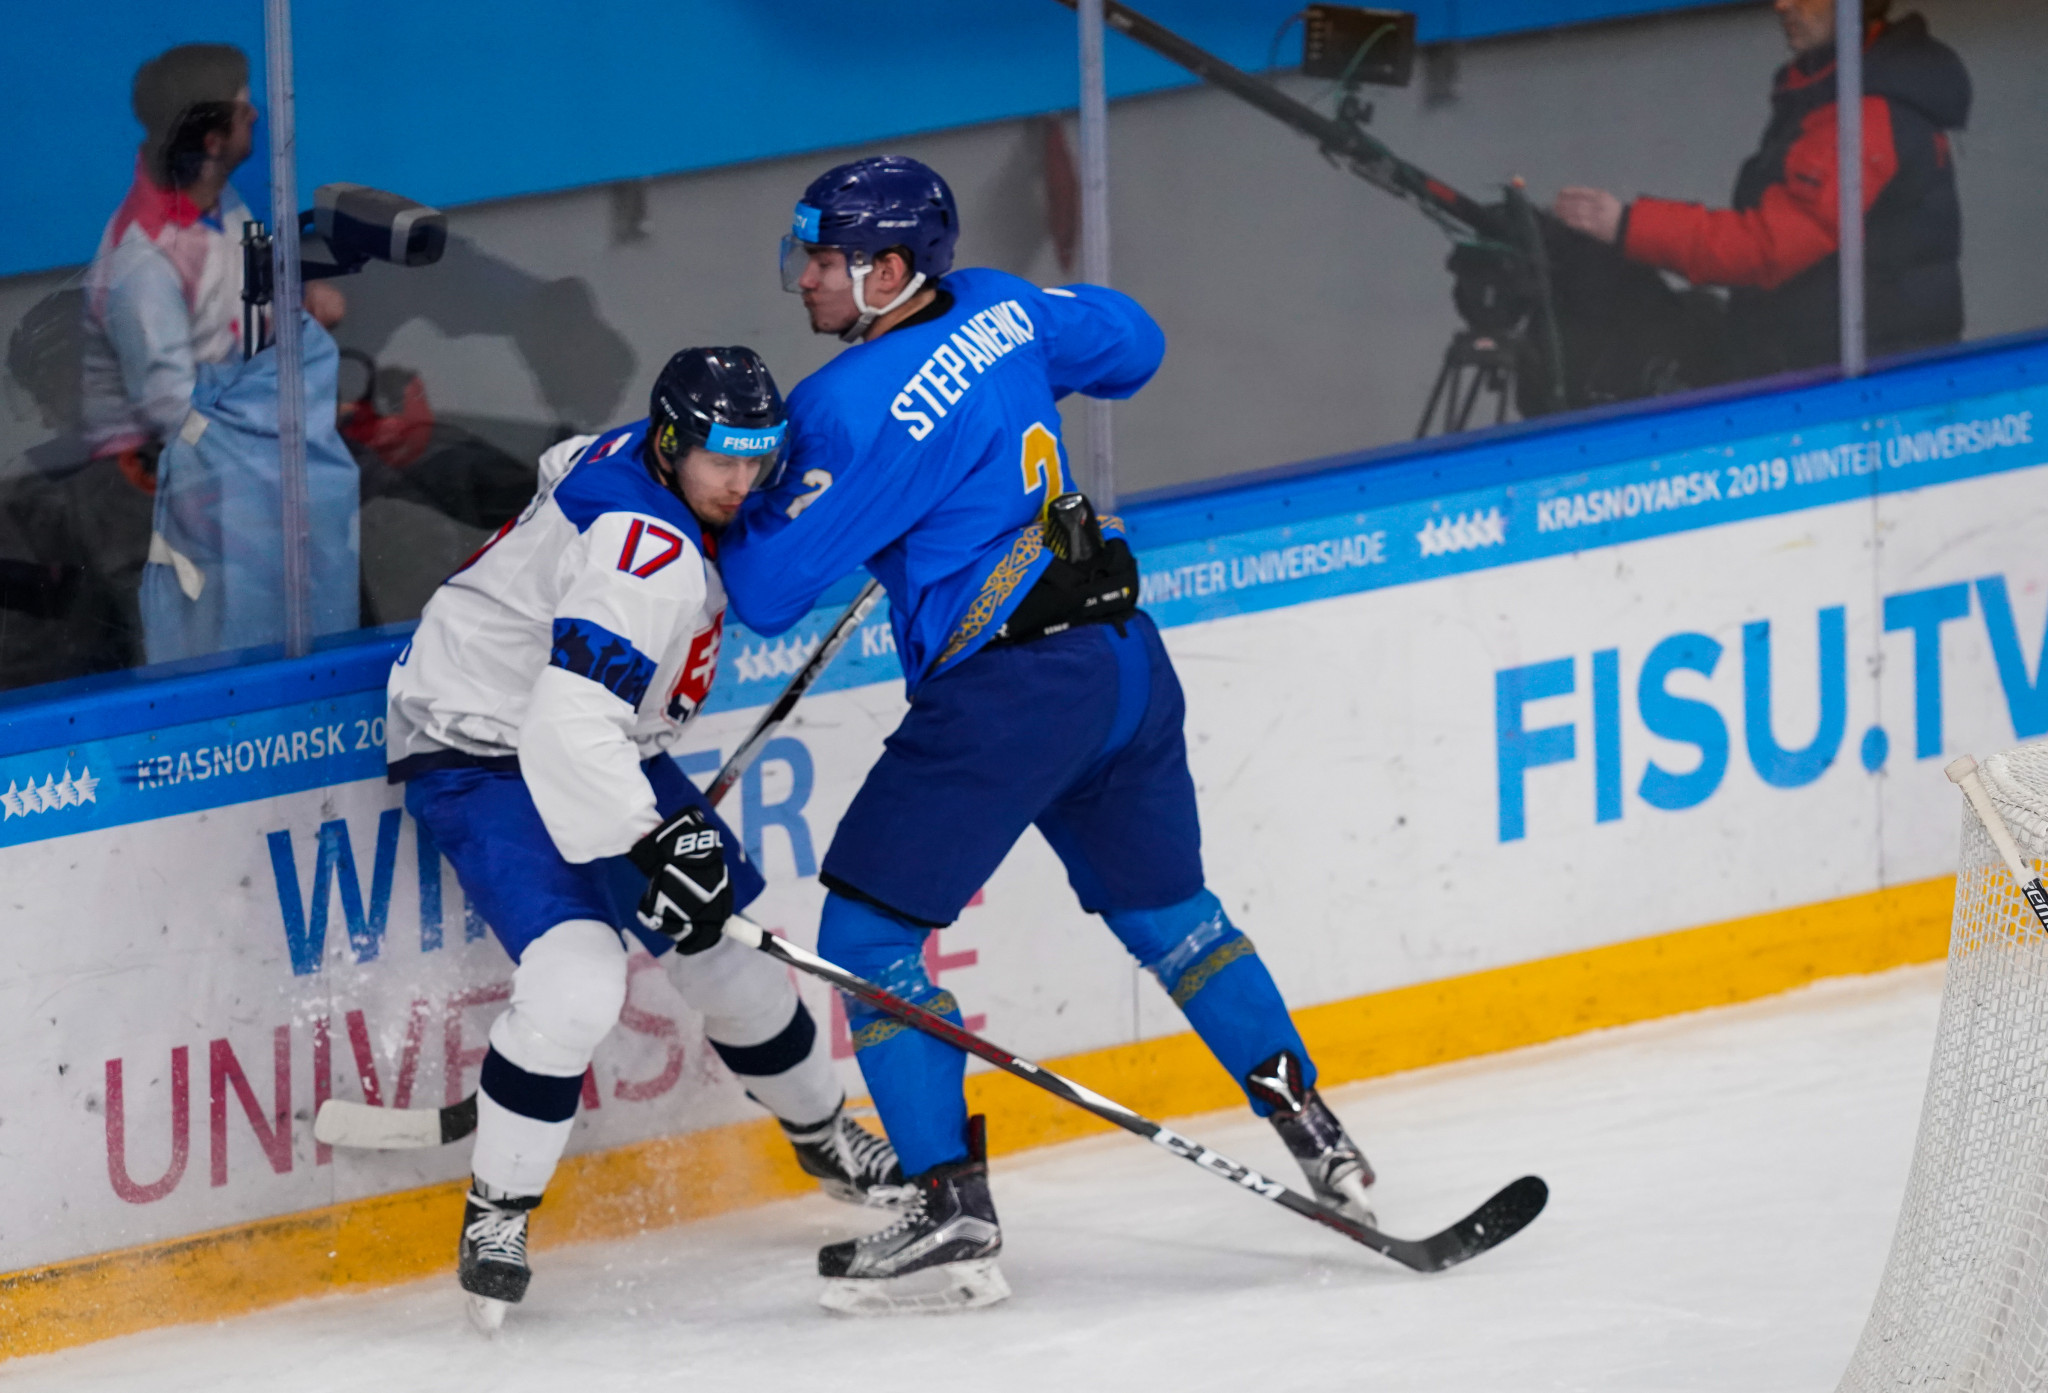 A feisty semi-final clash in the men's ice hockey saw Slovakia defeat Kazakhstan 4-0 ©Krasnoyarsk 2019